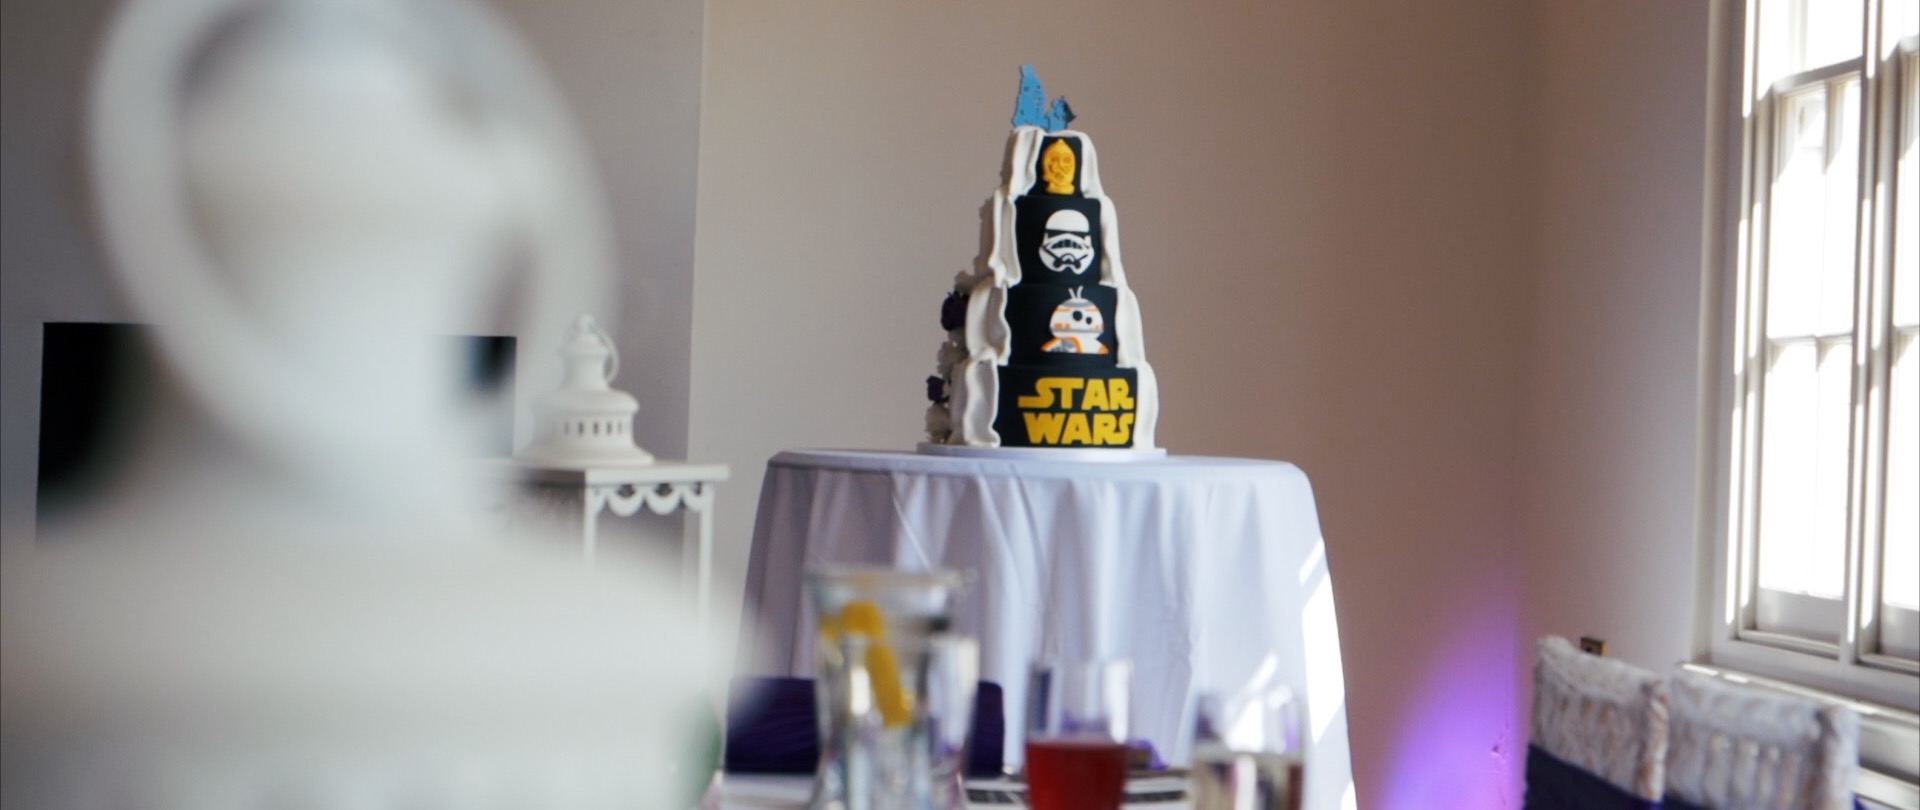 Star Wars Wedding Cake May 4th.jpg